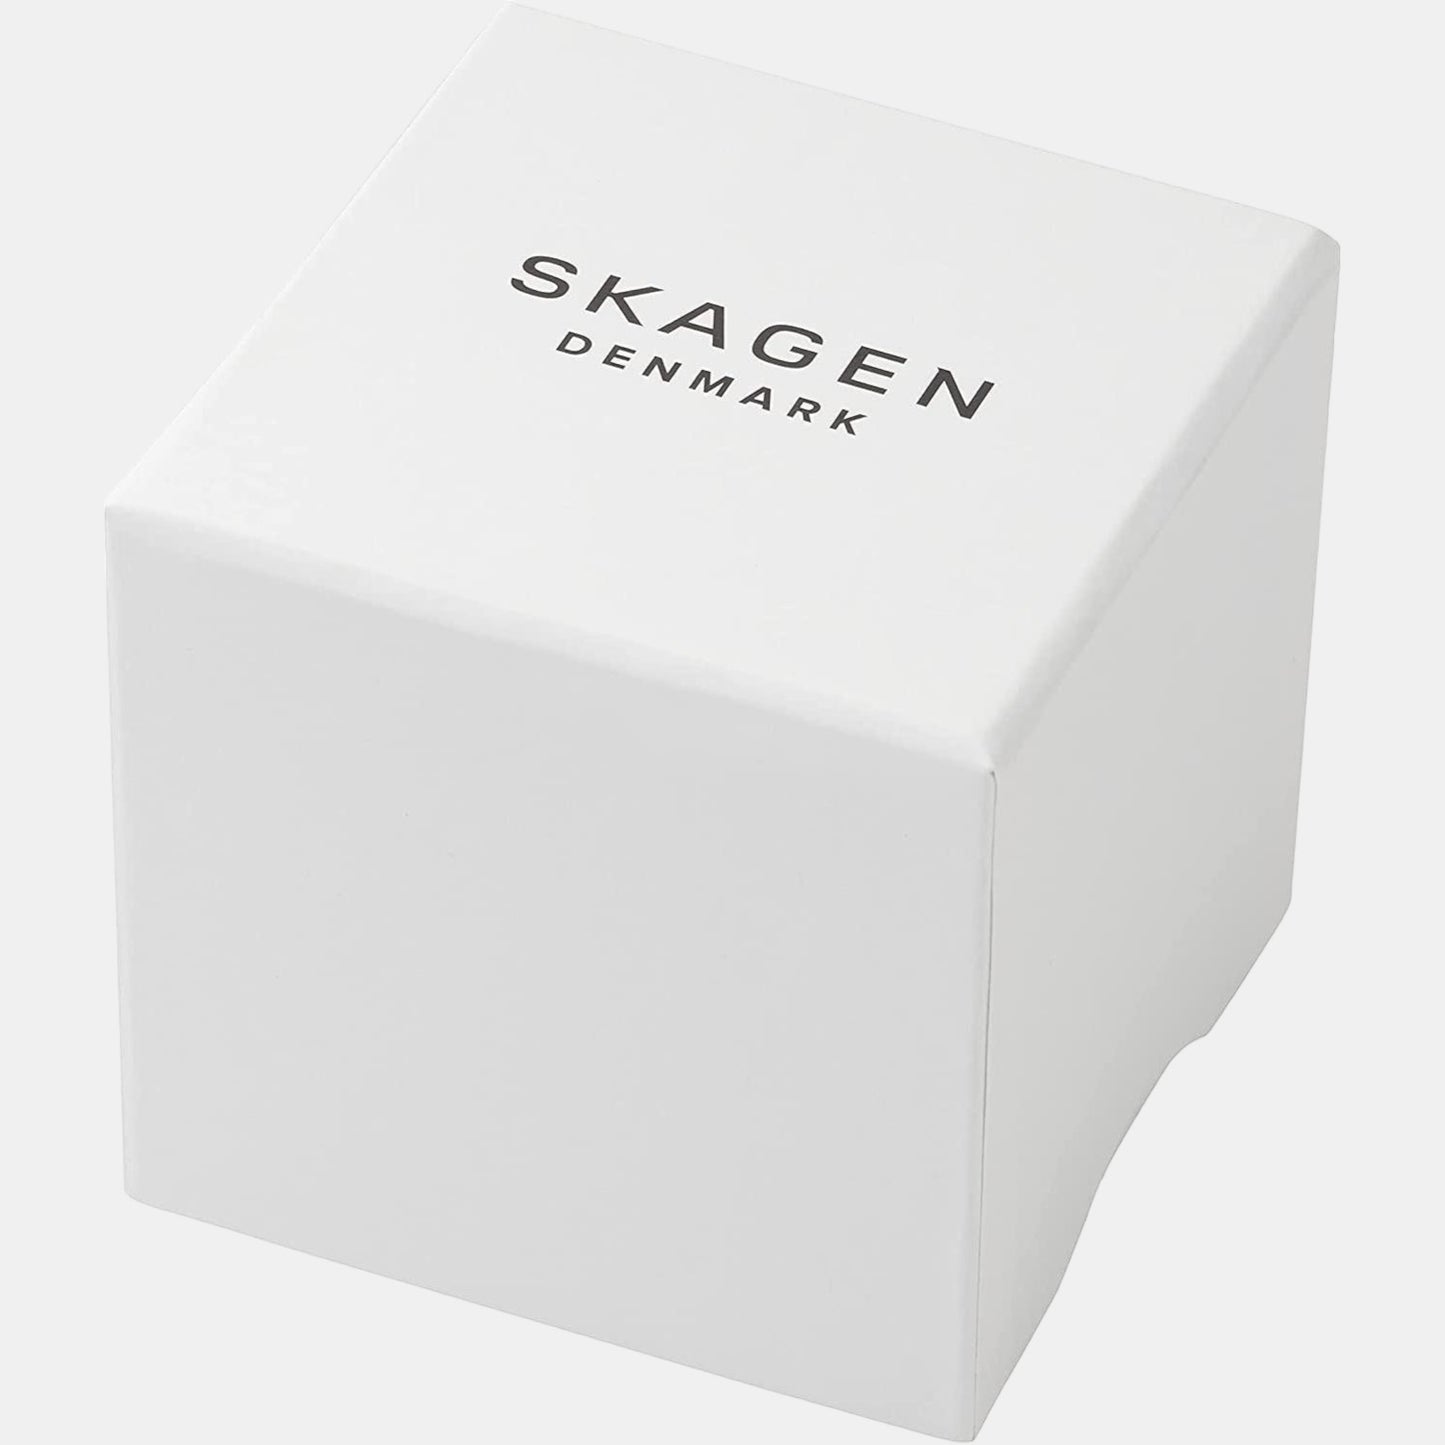 skagen-stainless-steel-silver-analog-female-watch-skw2149